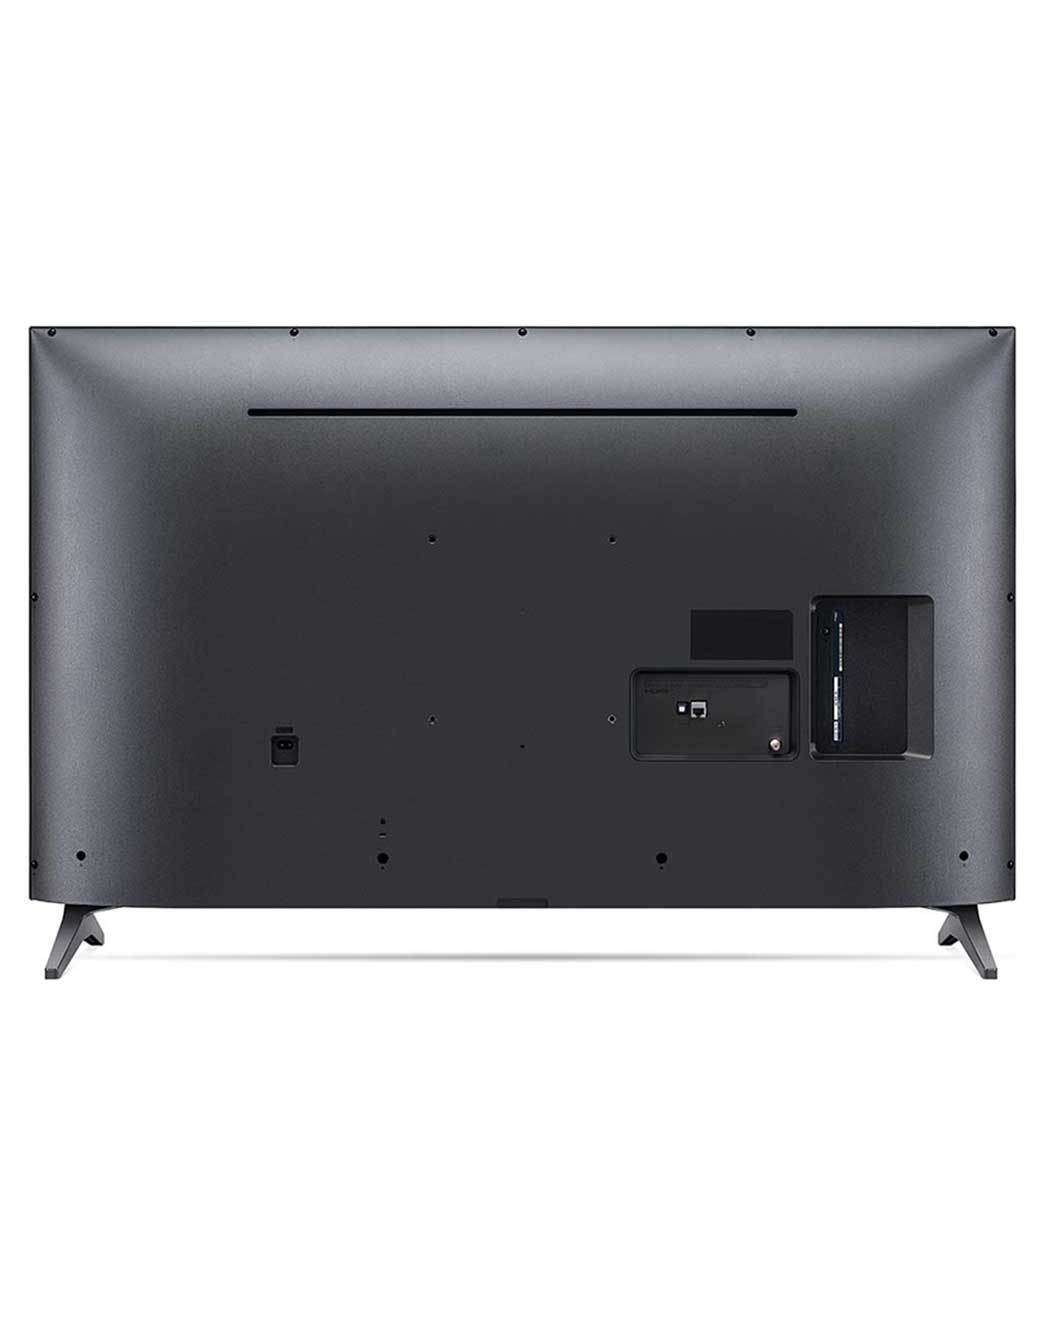 LG 65 Class UP7050 Series LED 4K UHD Smart webOS TV - 65UP7050PUJ 